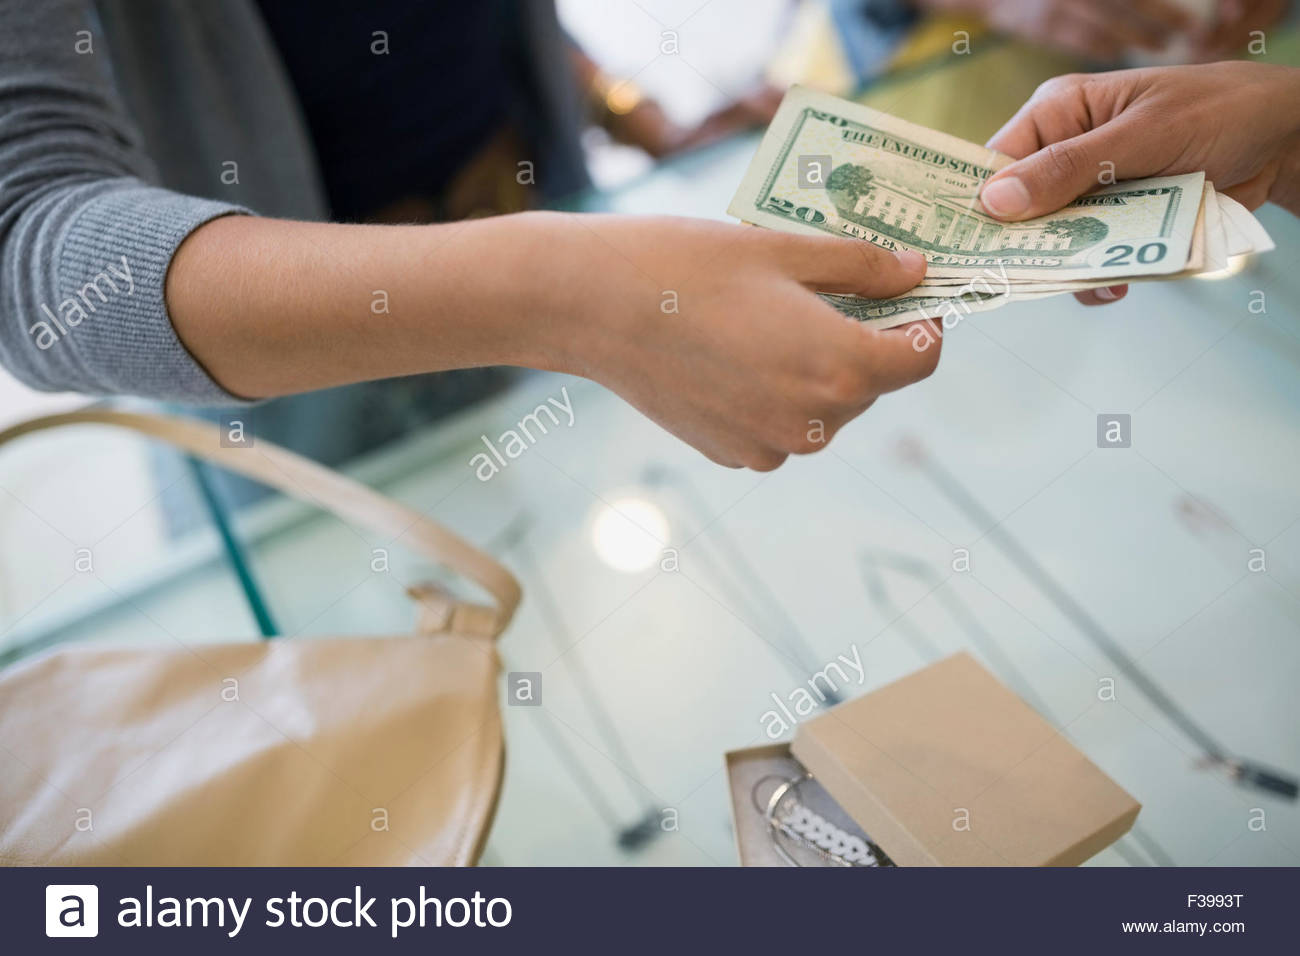 Woman paying cash at shop counter Stock Photo